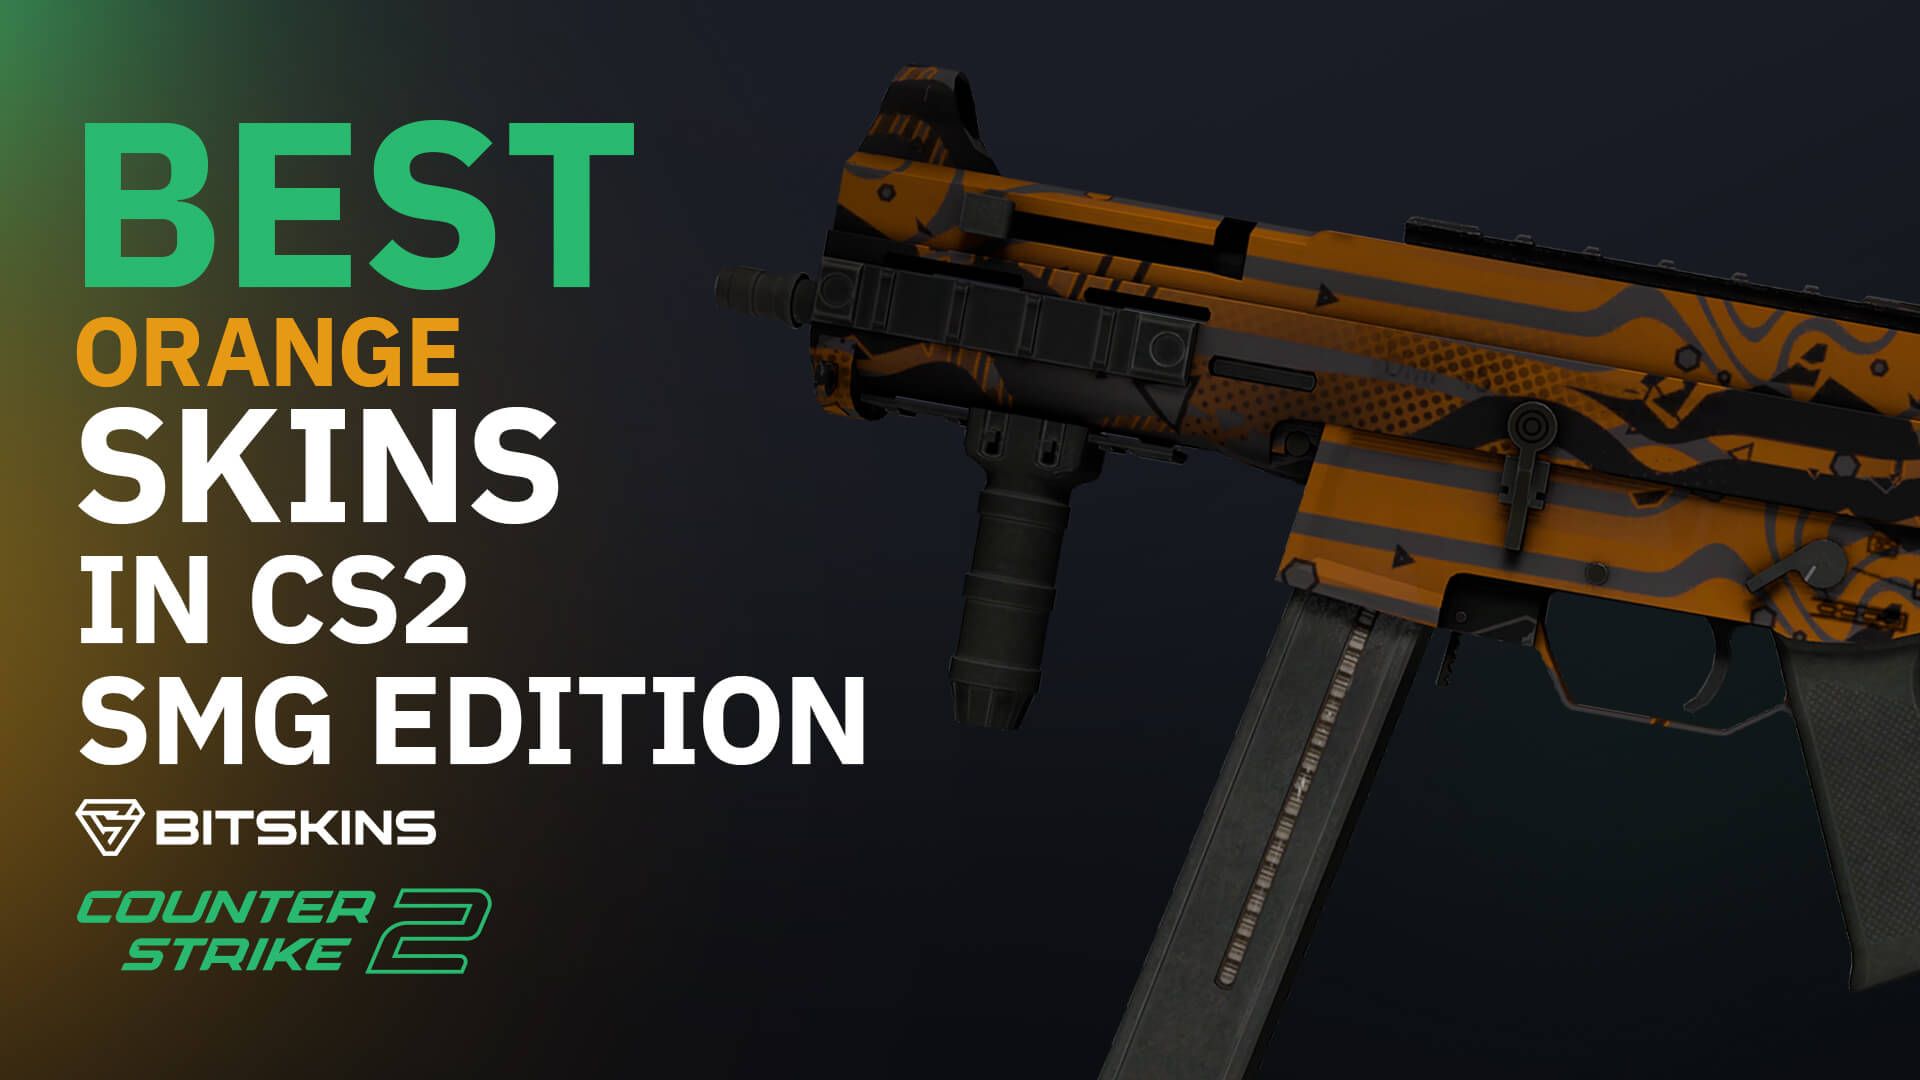 Best Orange Skins in CS2: SMG Edition